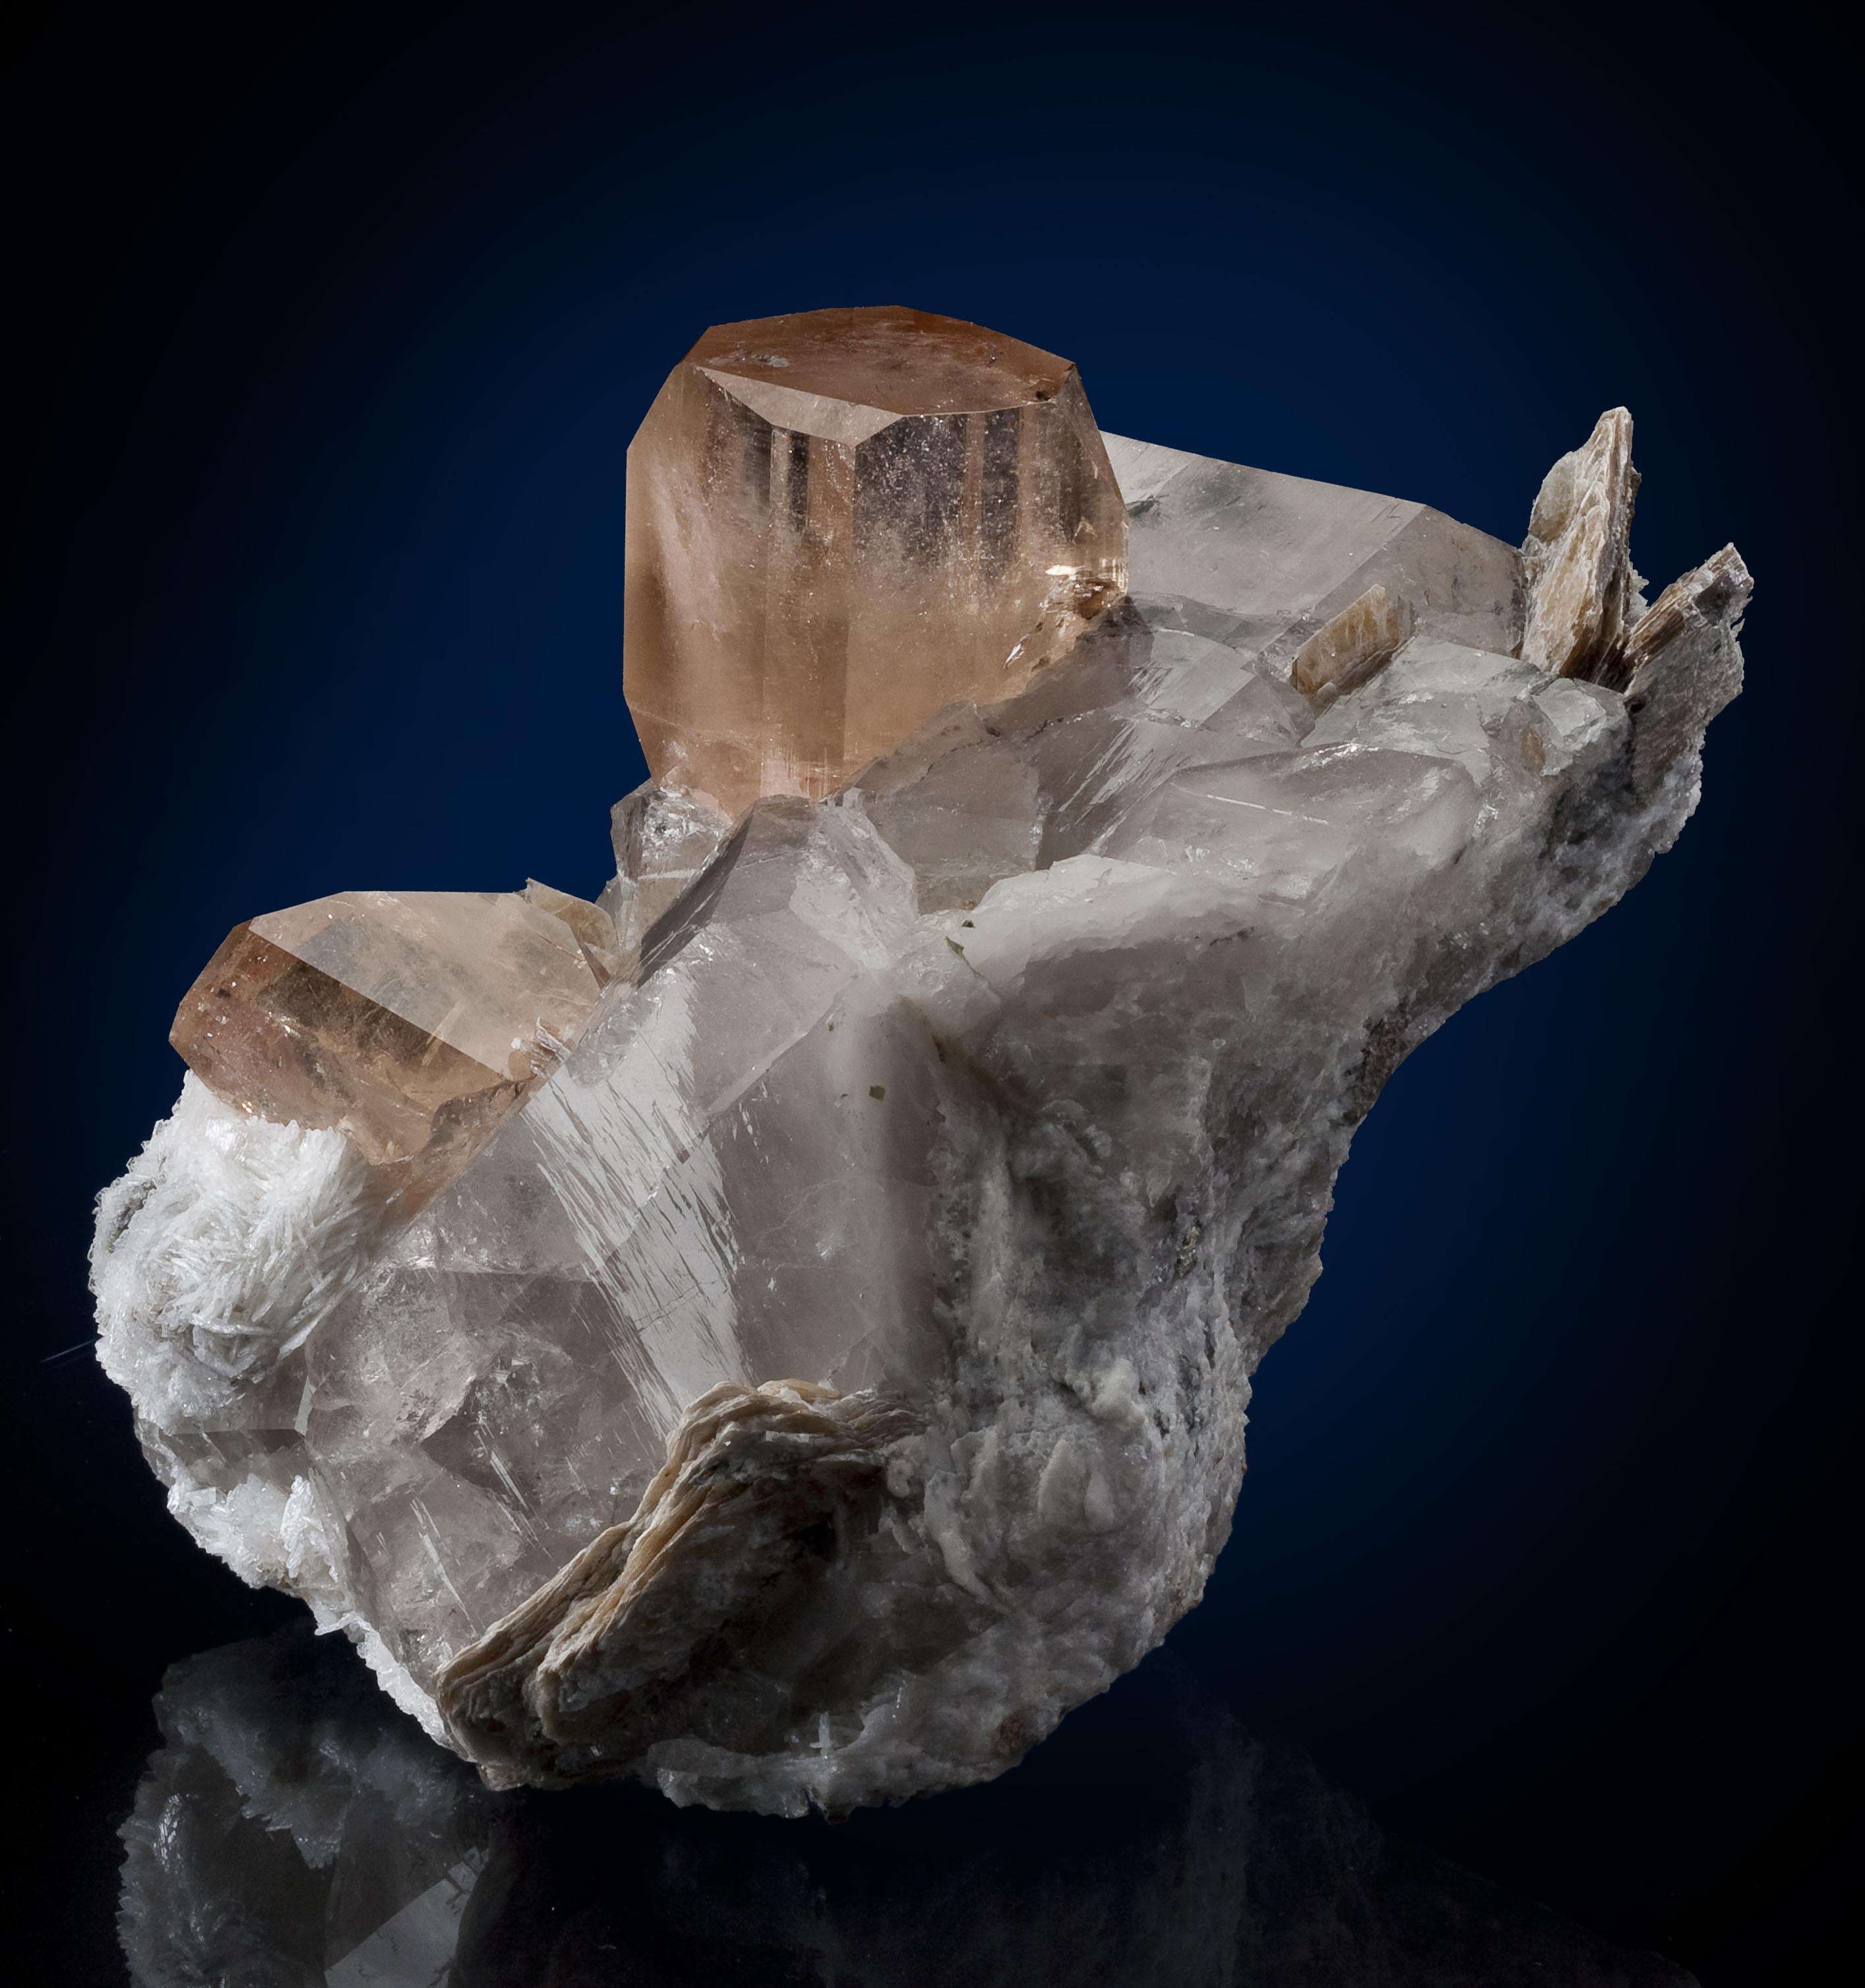 Topaz on Quartz With Muscovite - J11-69 - Dassu - Pakistan Mineral Specimen